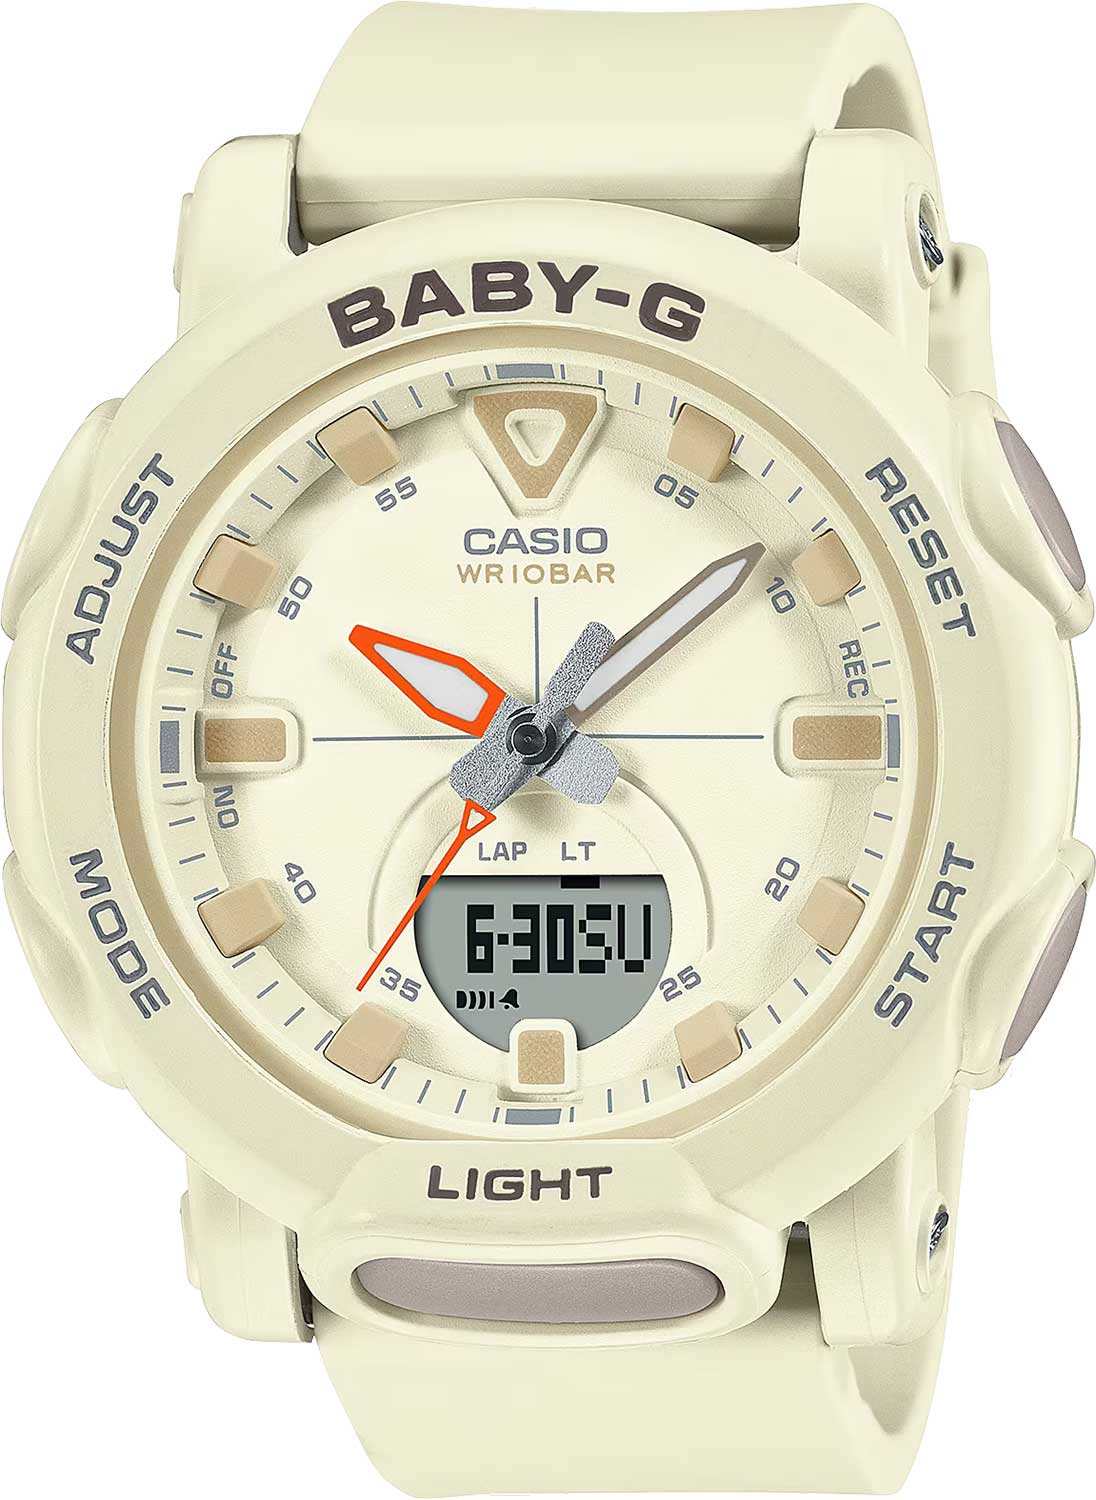    Casio Baby-G BGA-310-7A  